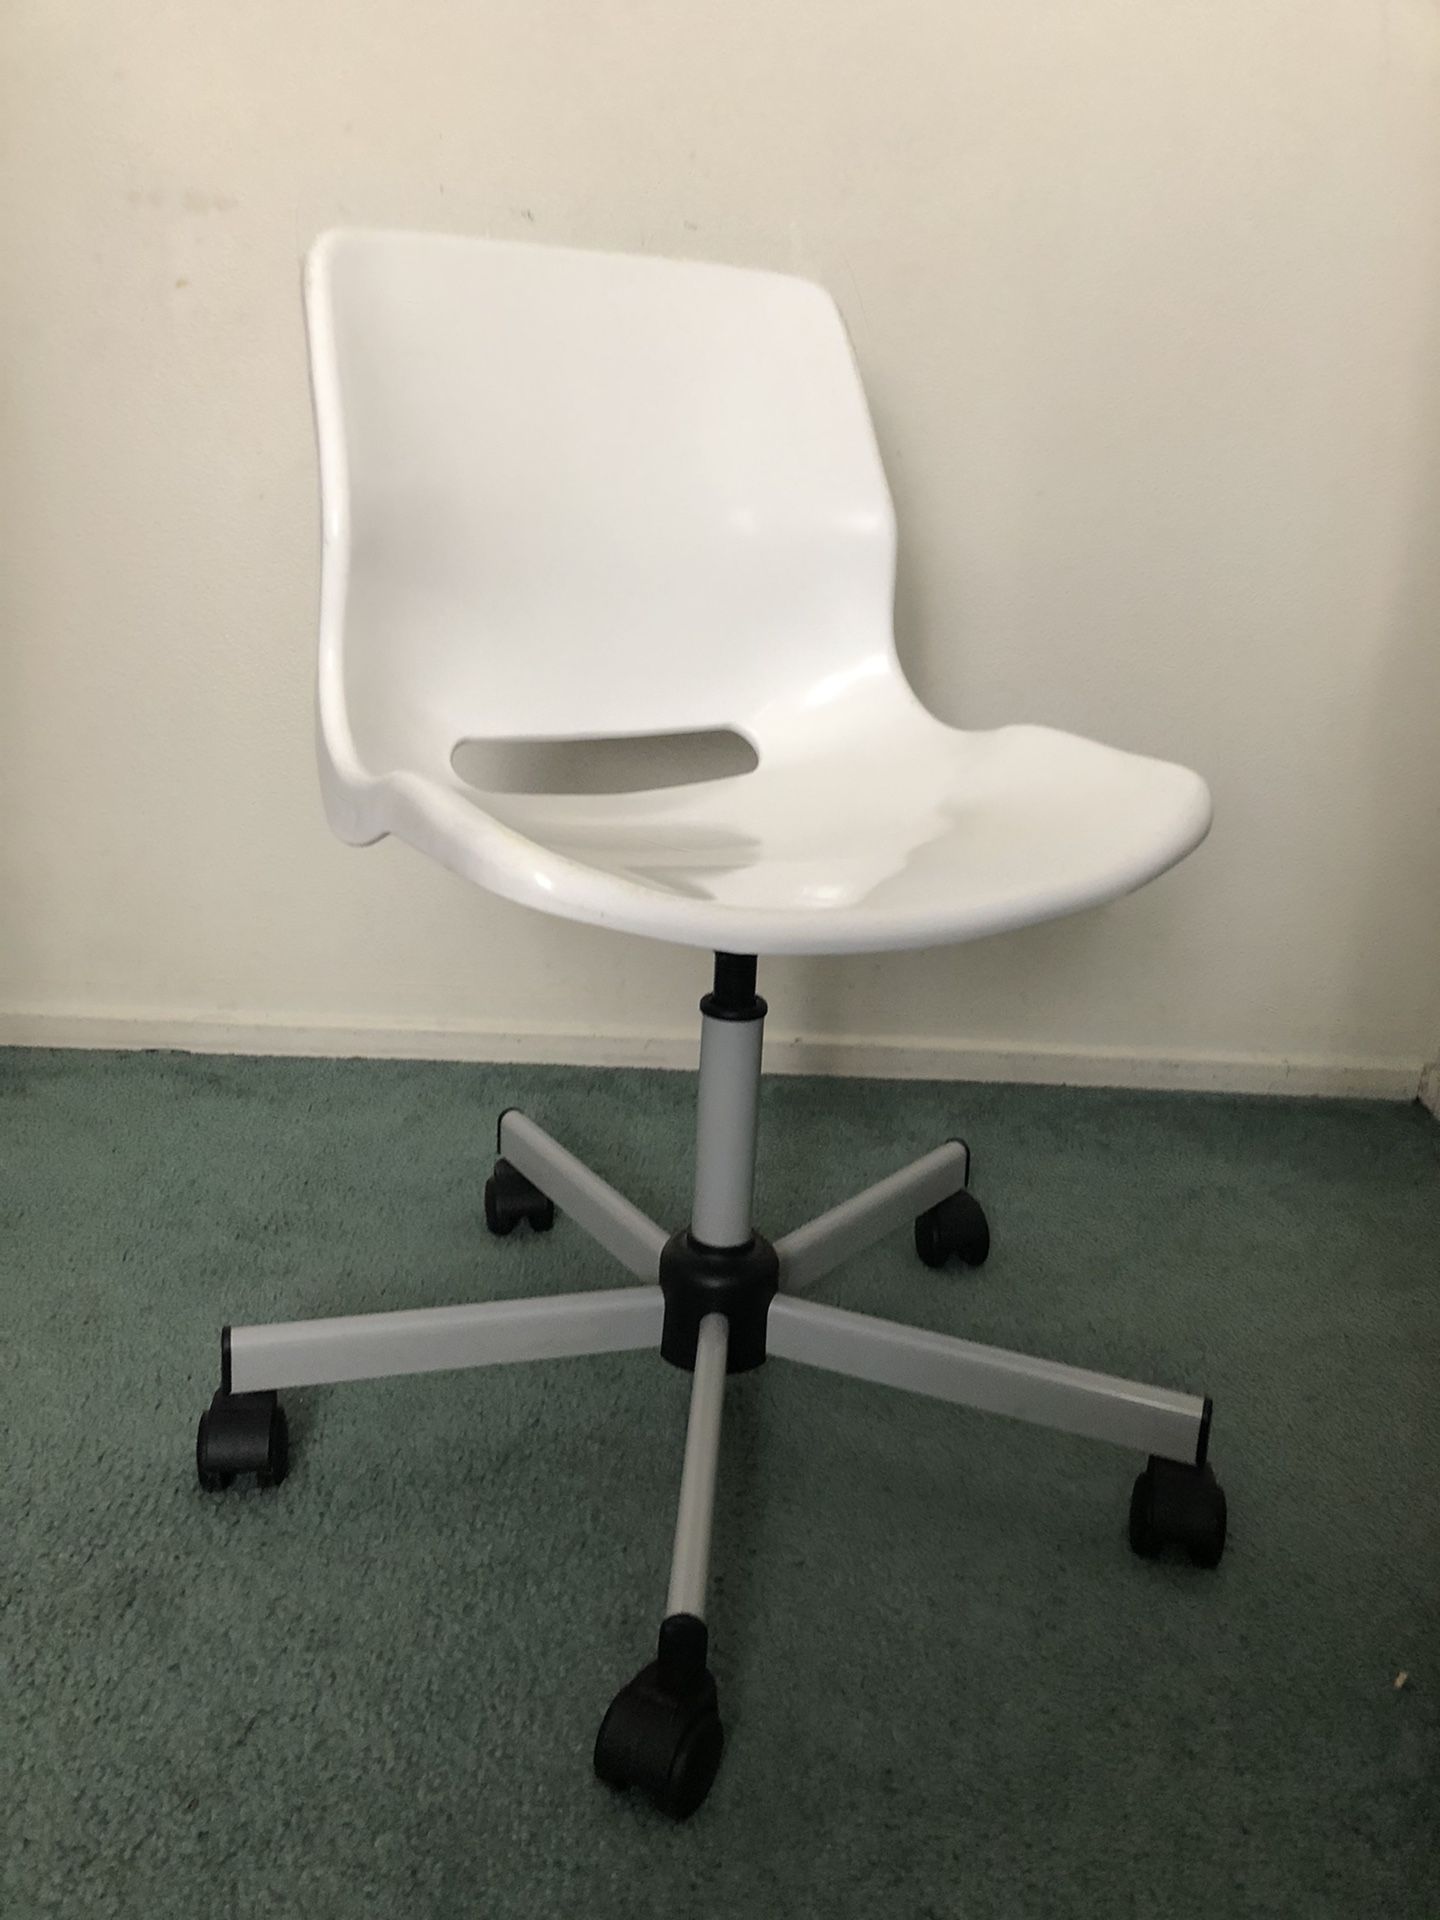 Ikea student desk chair